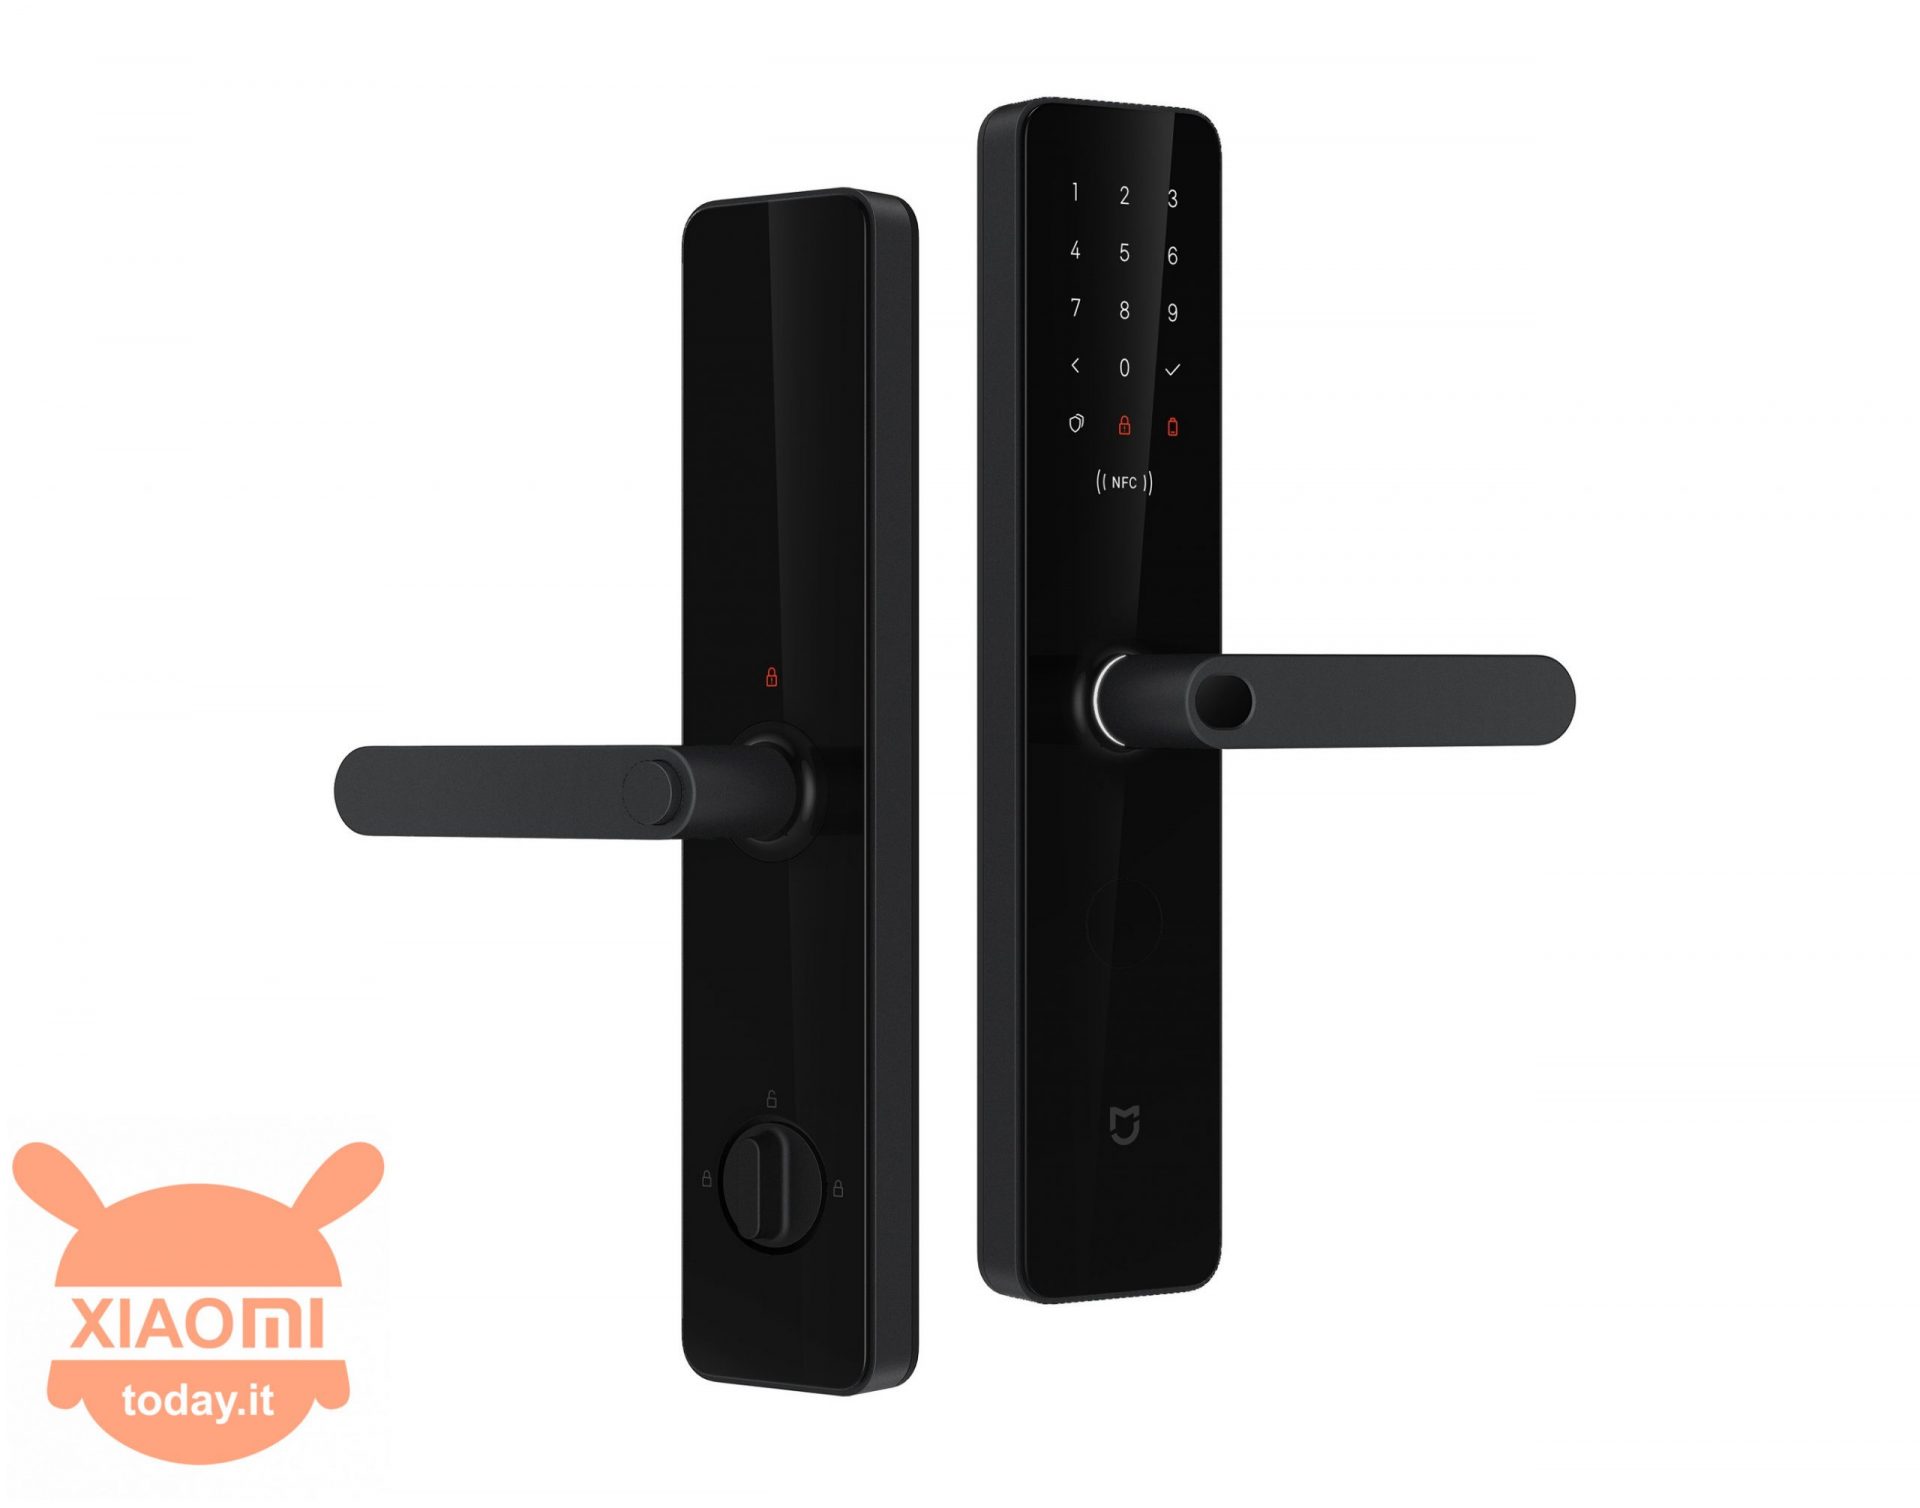 Xiaomi Mijia Smart Door Lock: Ang unang Mijia-branded lock ay inihayag